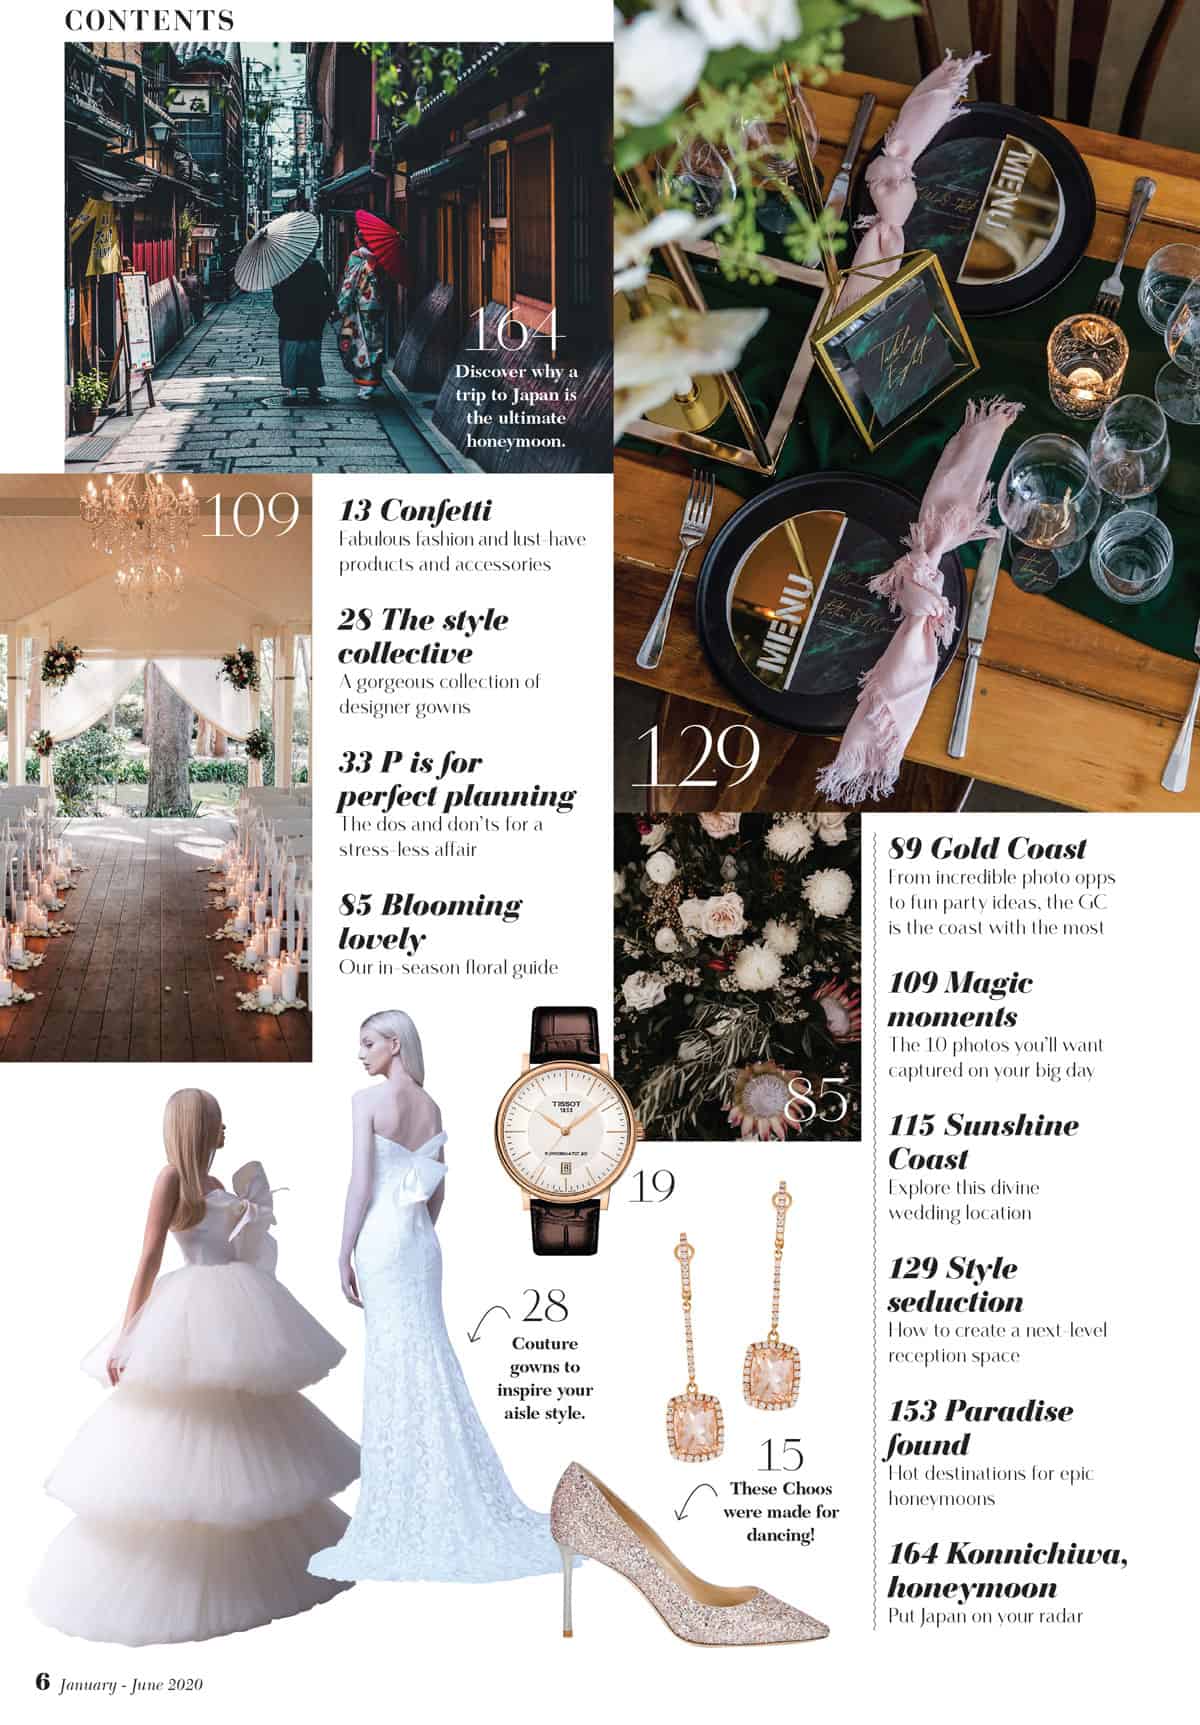 2020 edition of Queensland Brides magazine